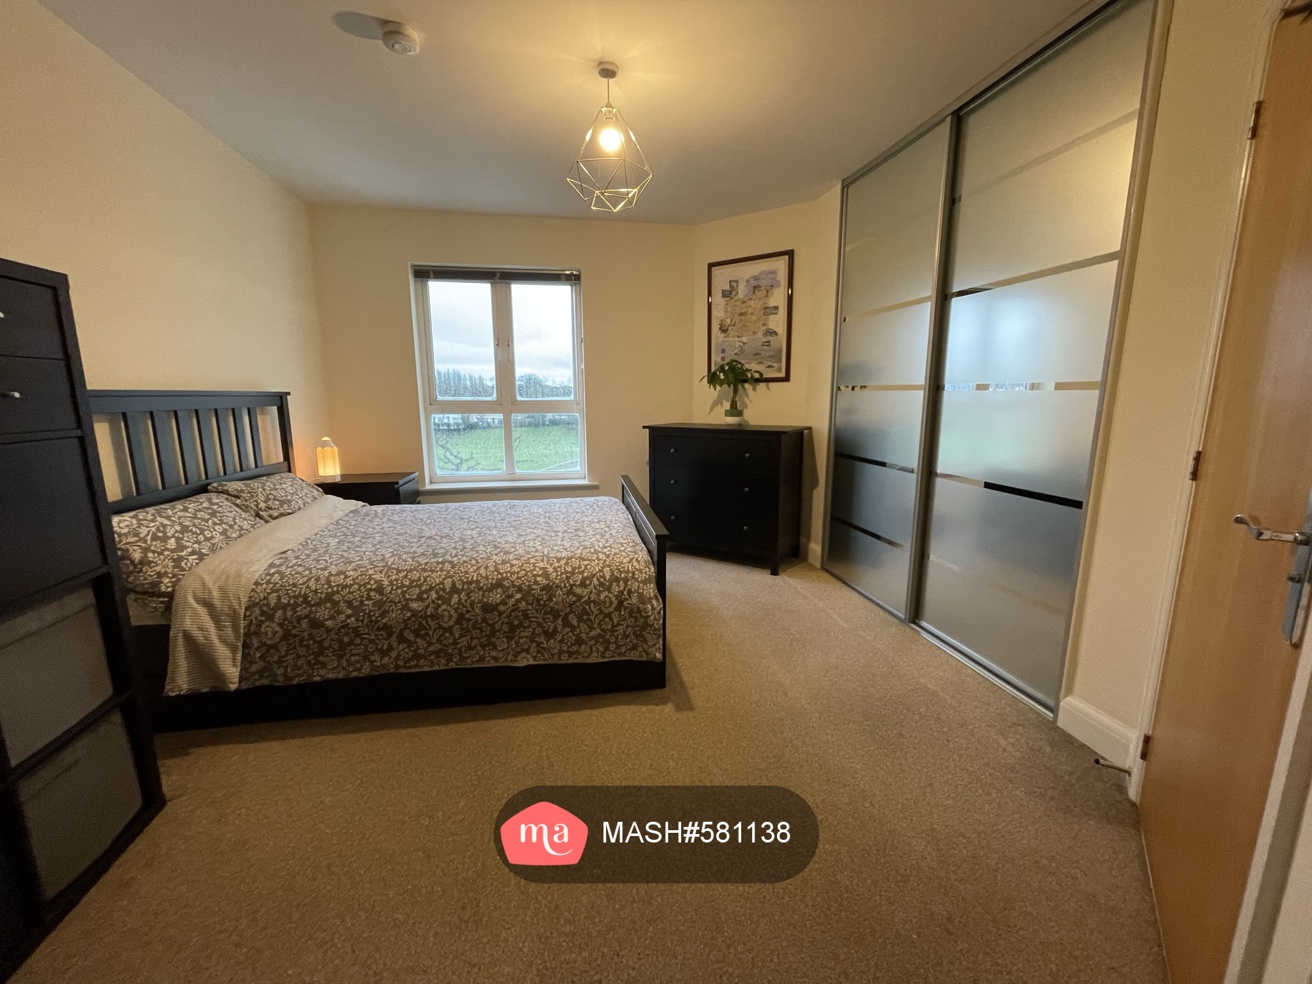 2 Bedroom Flat to rent in Warwick - Mashroom